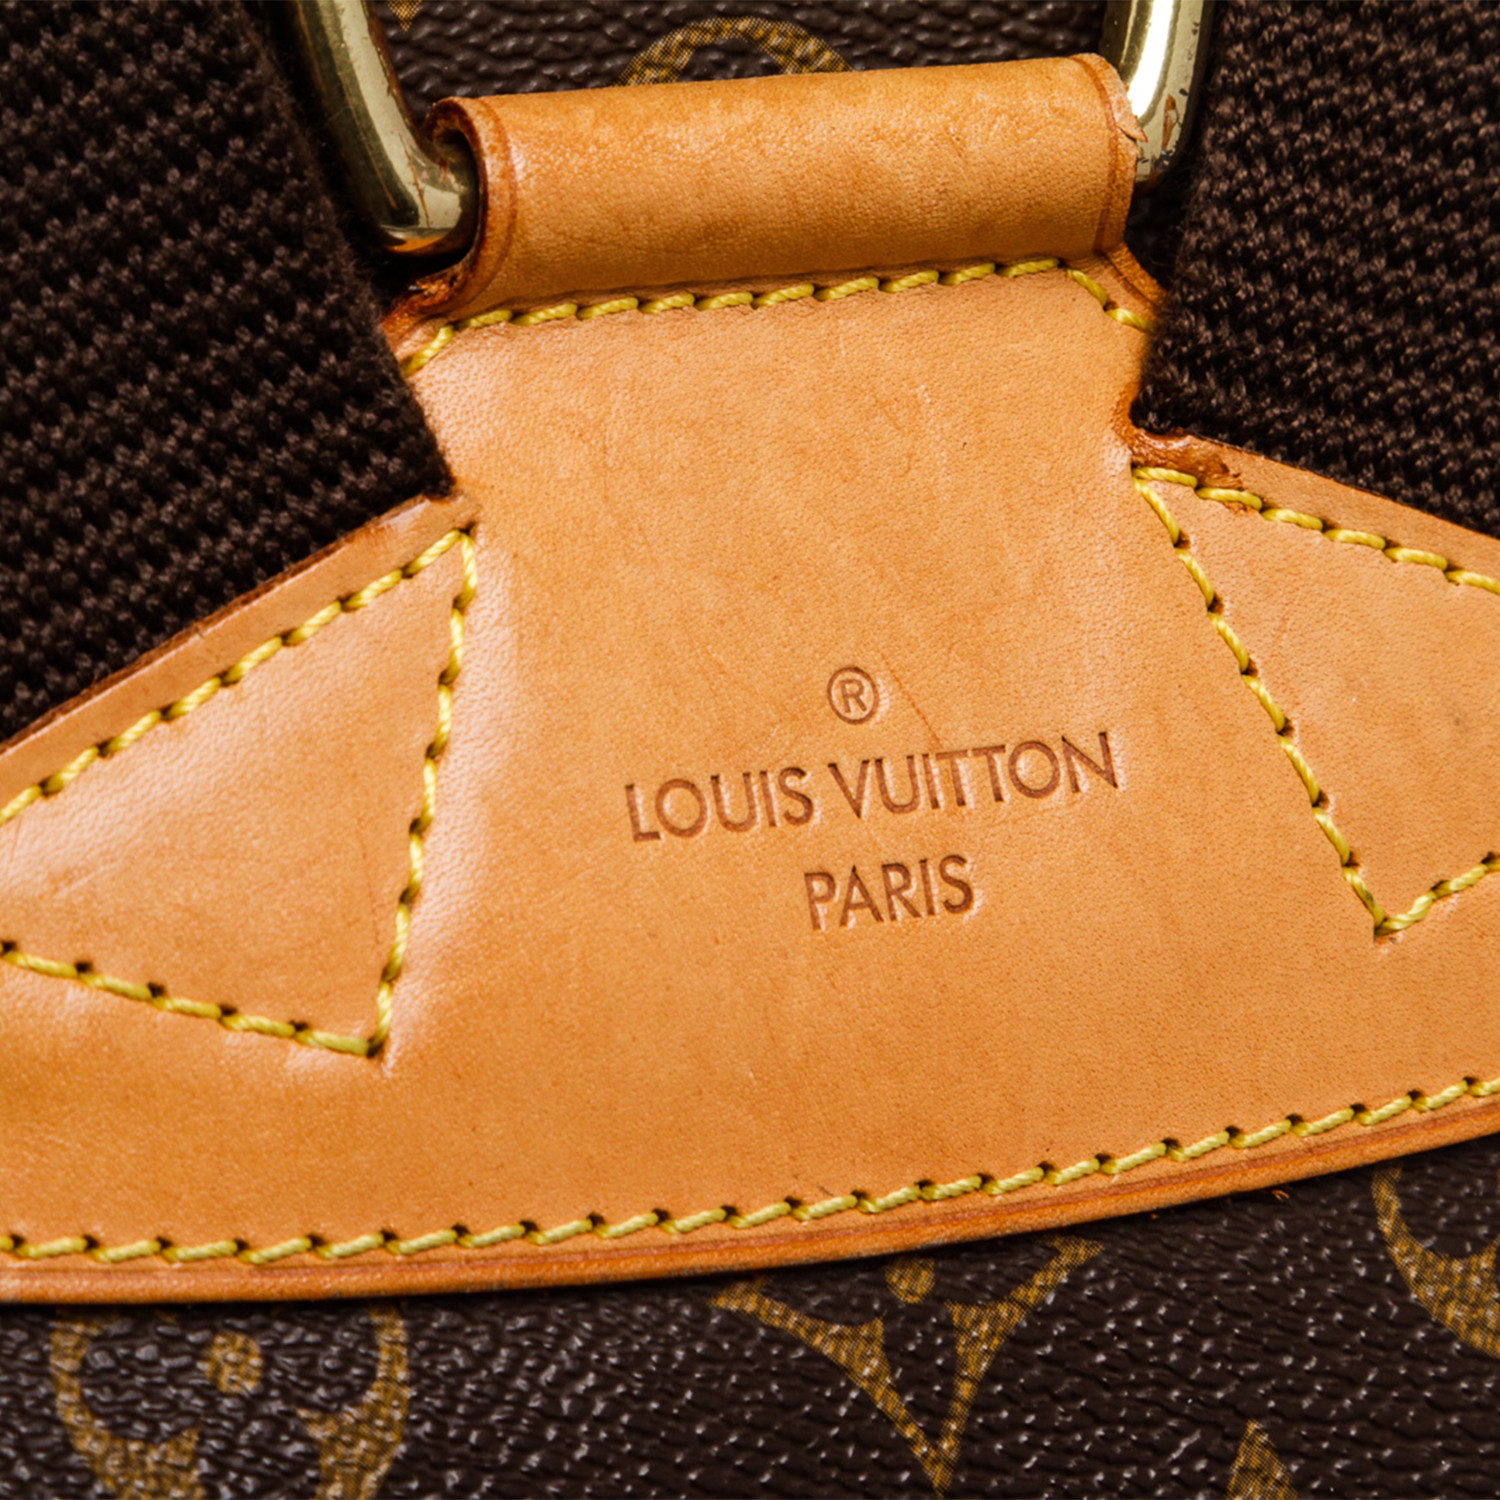 Louis Vuitton Palk Backpack  Natural Resource Department